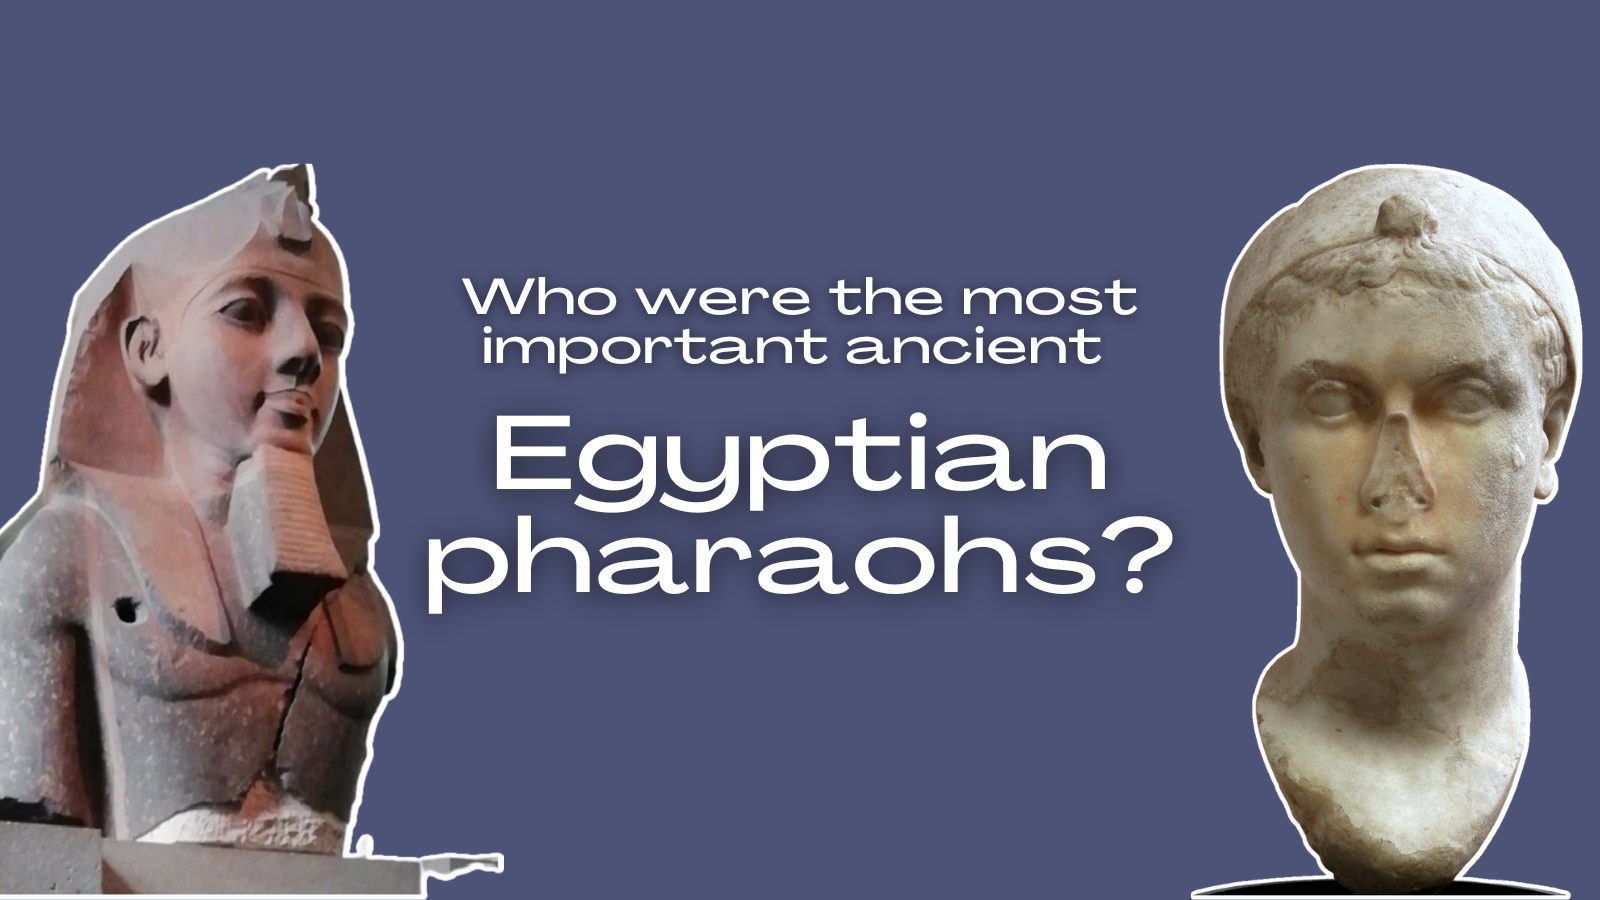 Important ancient Egyptian pharaohs